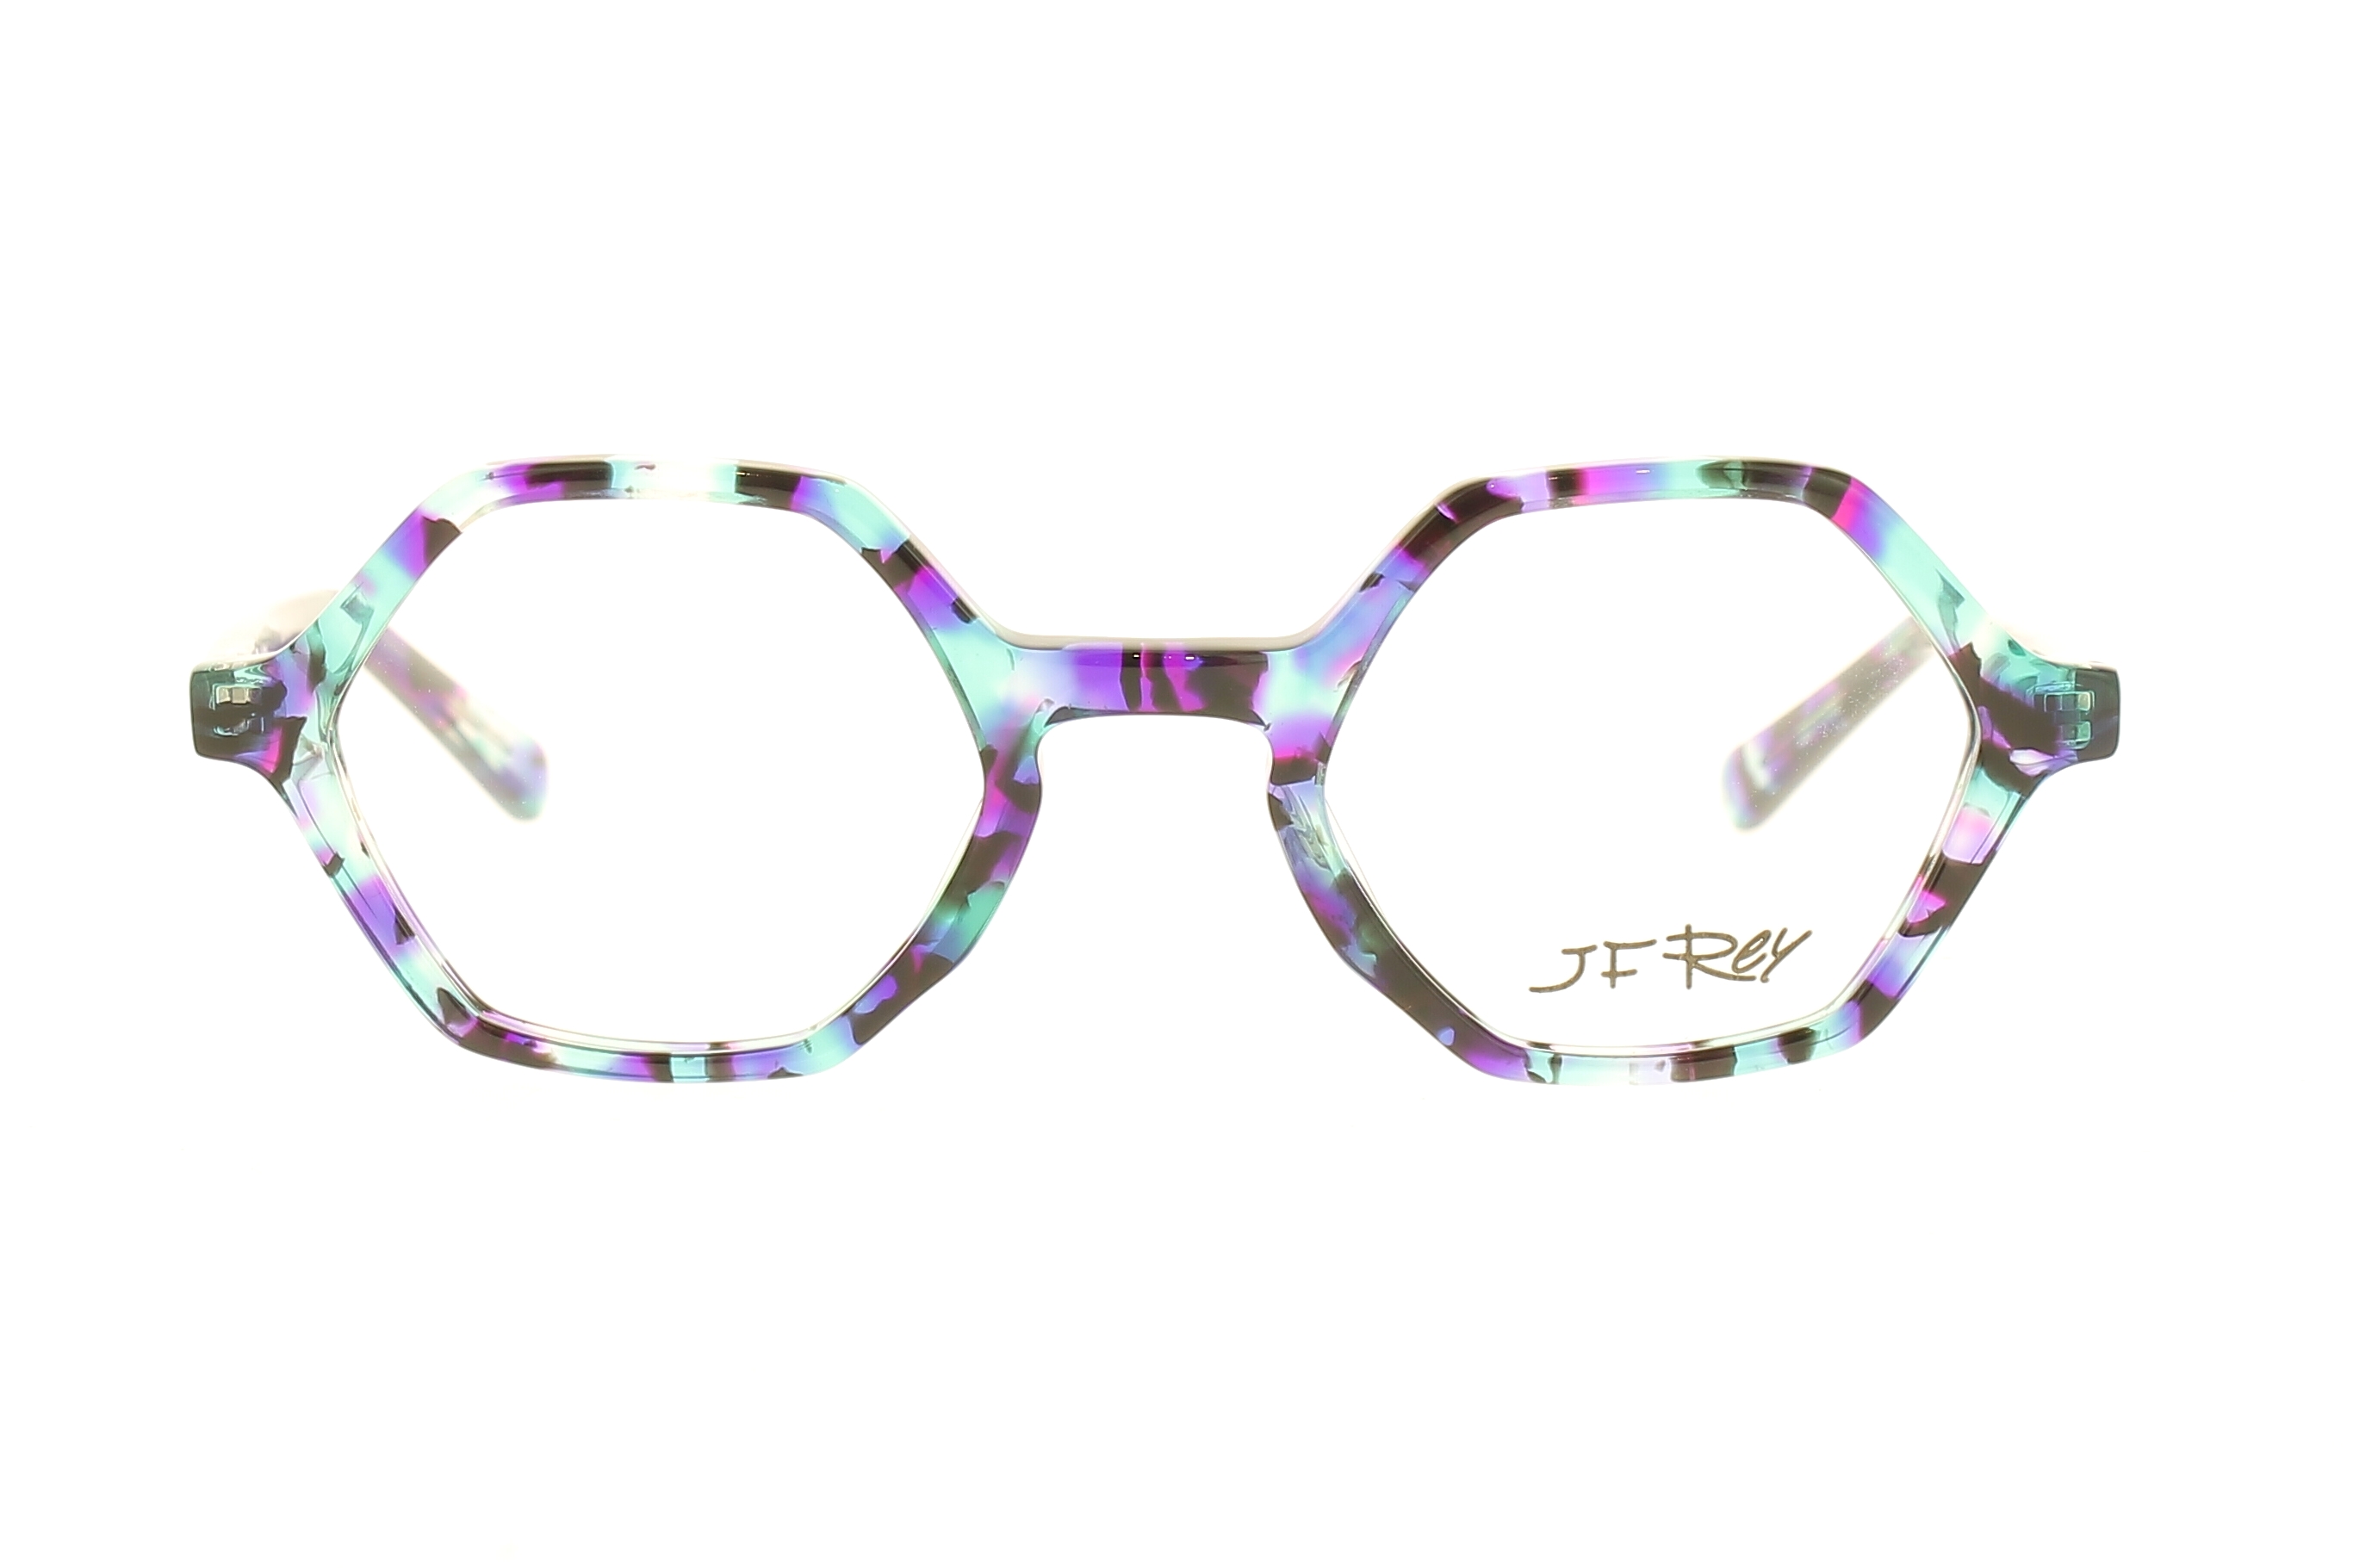 Glasses Jf-rey Flash, turquoise colour - Doyle